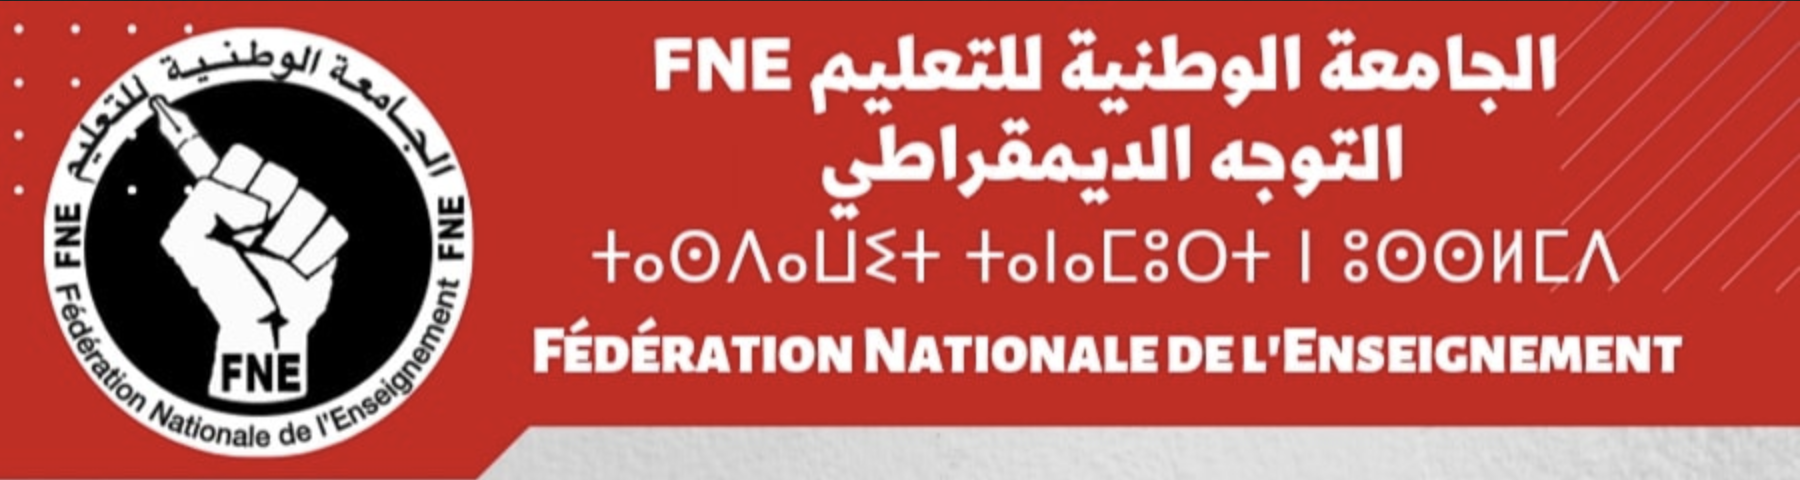 FNE - الجامعة الوطنية للتعليم